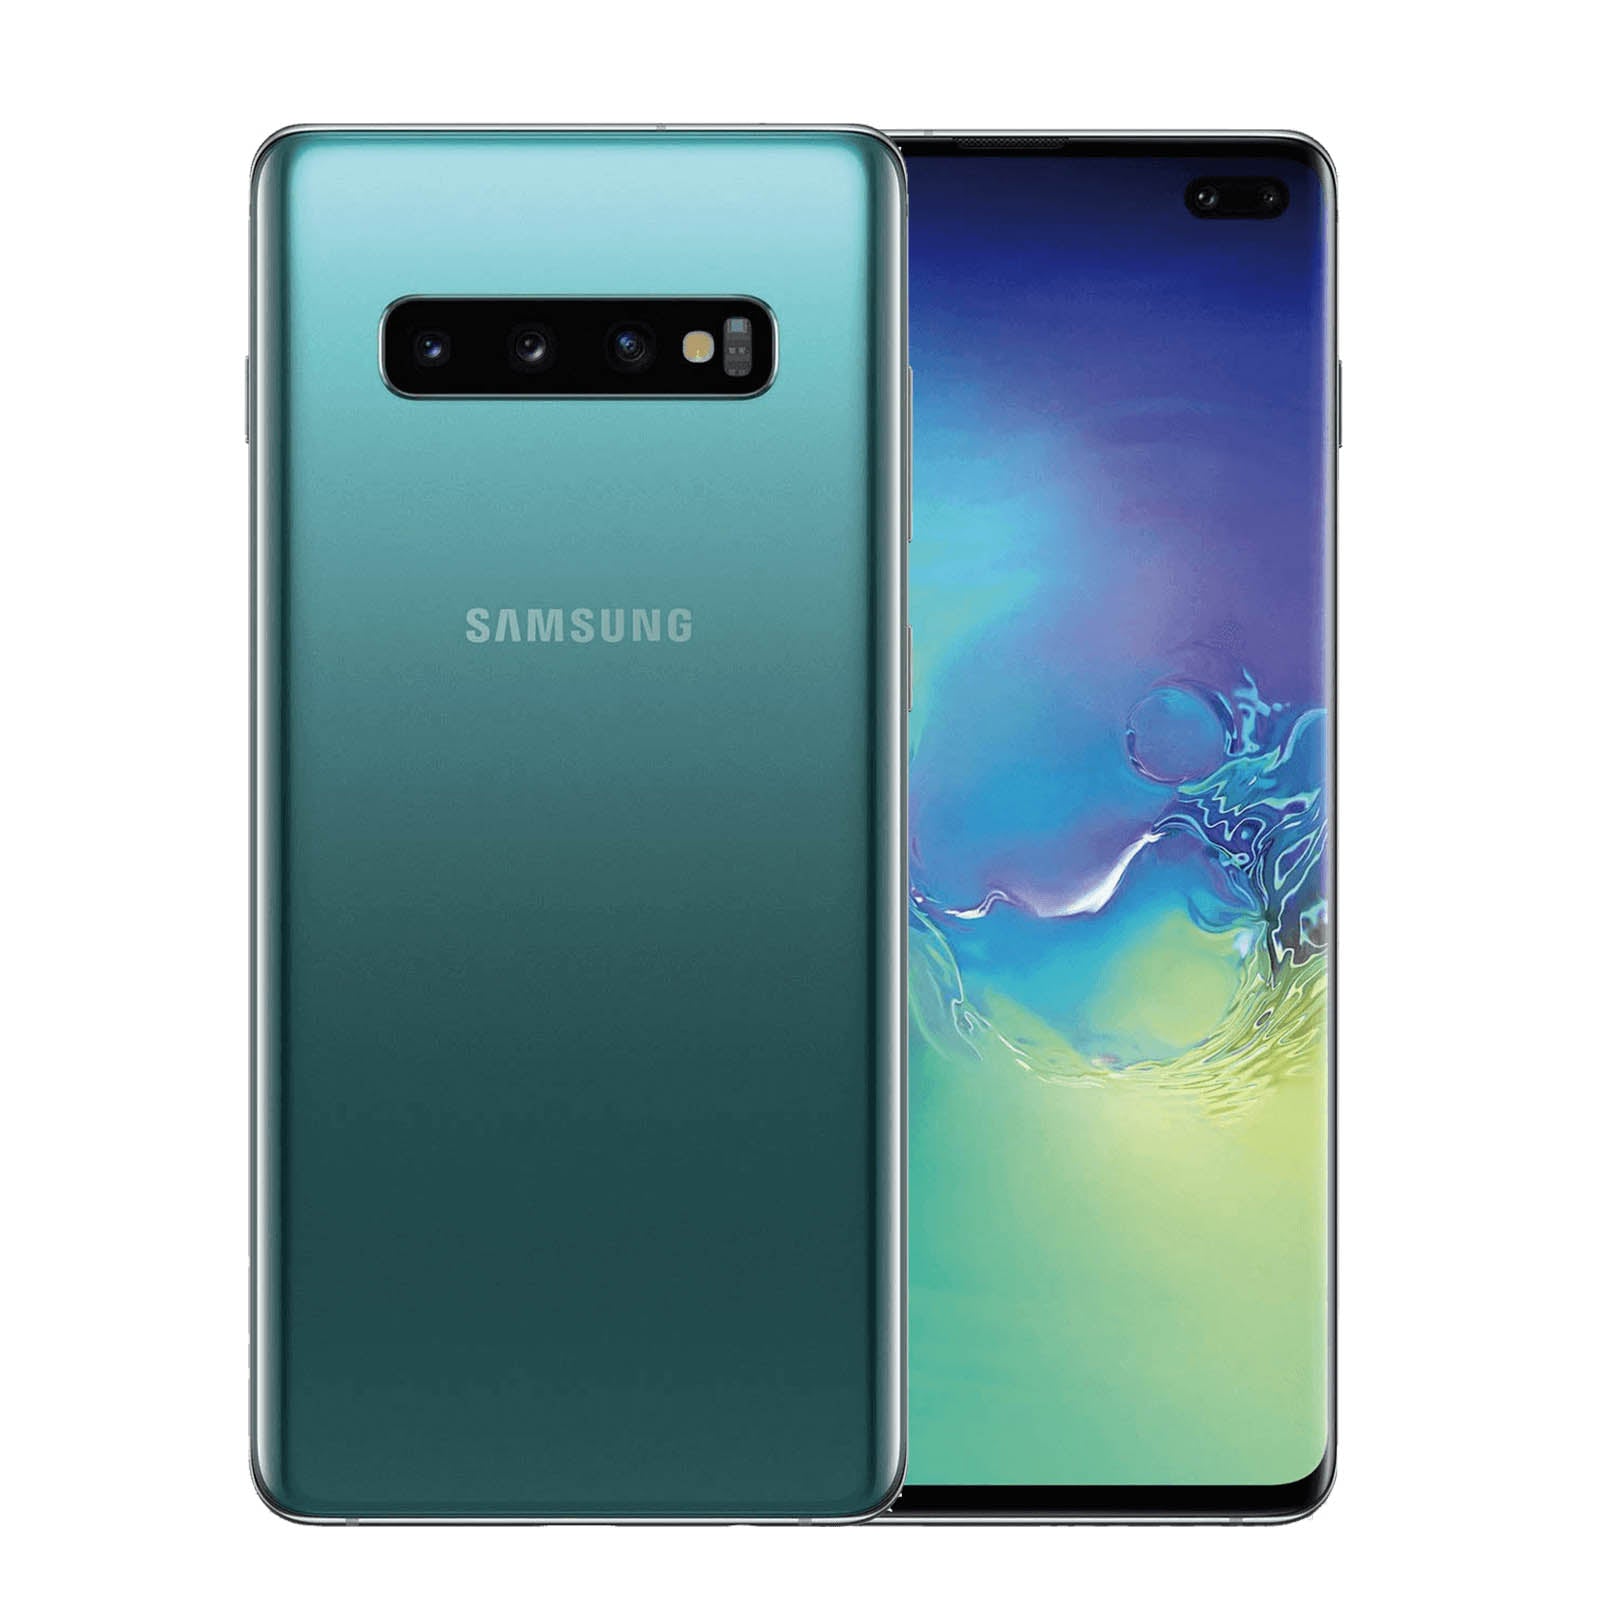 Samsung Galaxy S10 128GB - Prism Green – Loop Mobile - AU